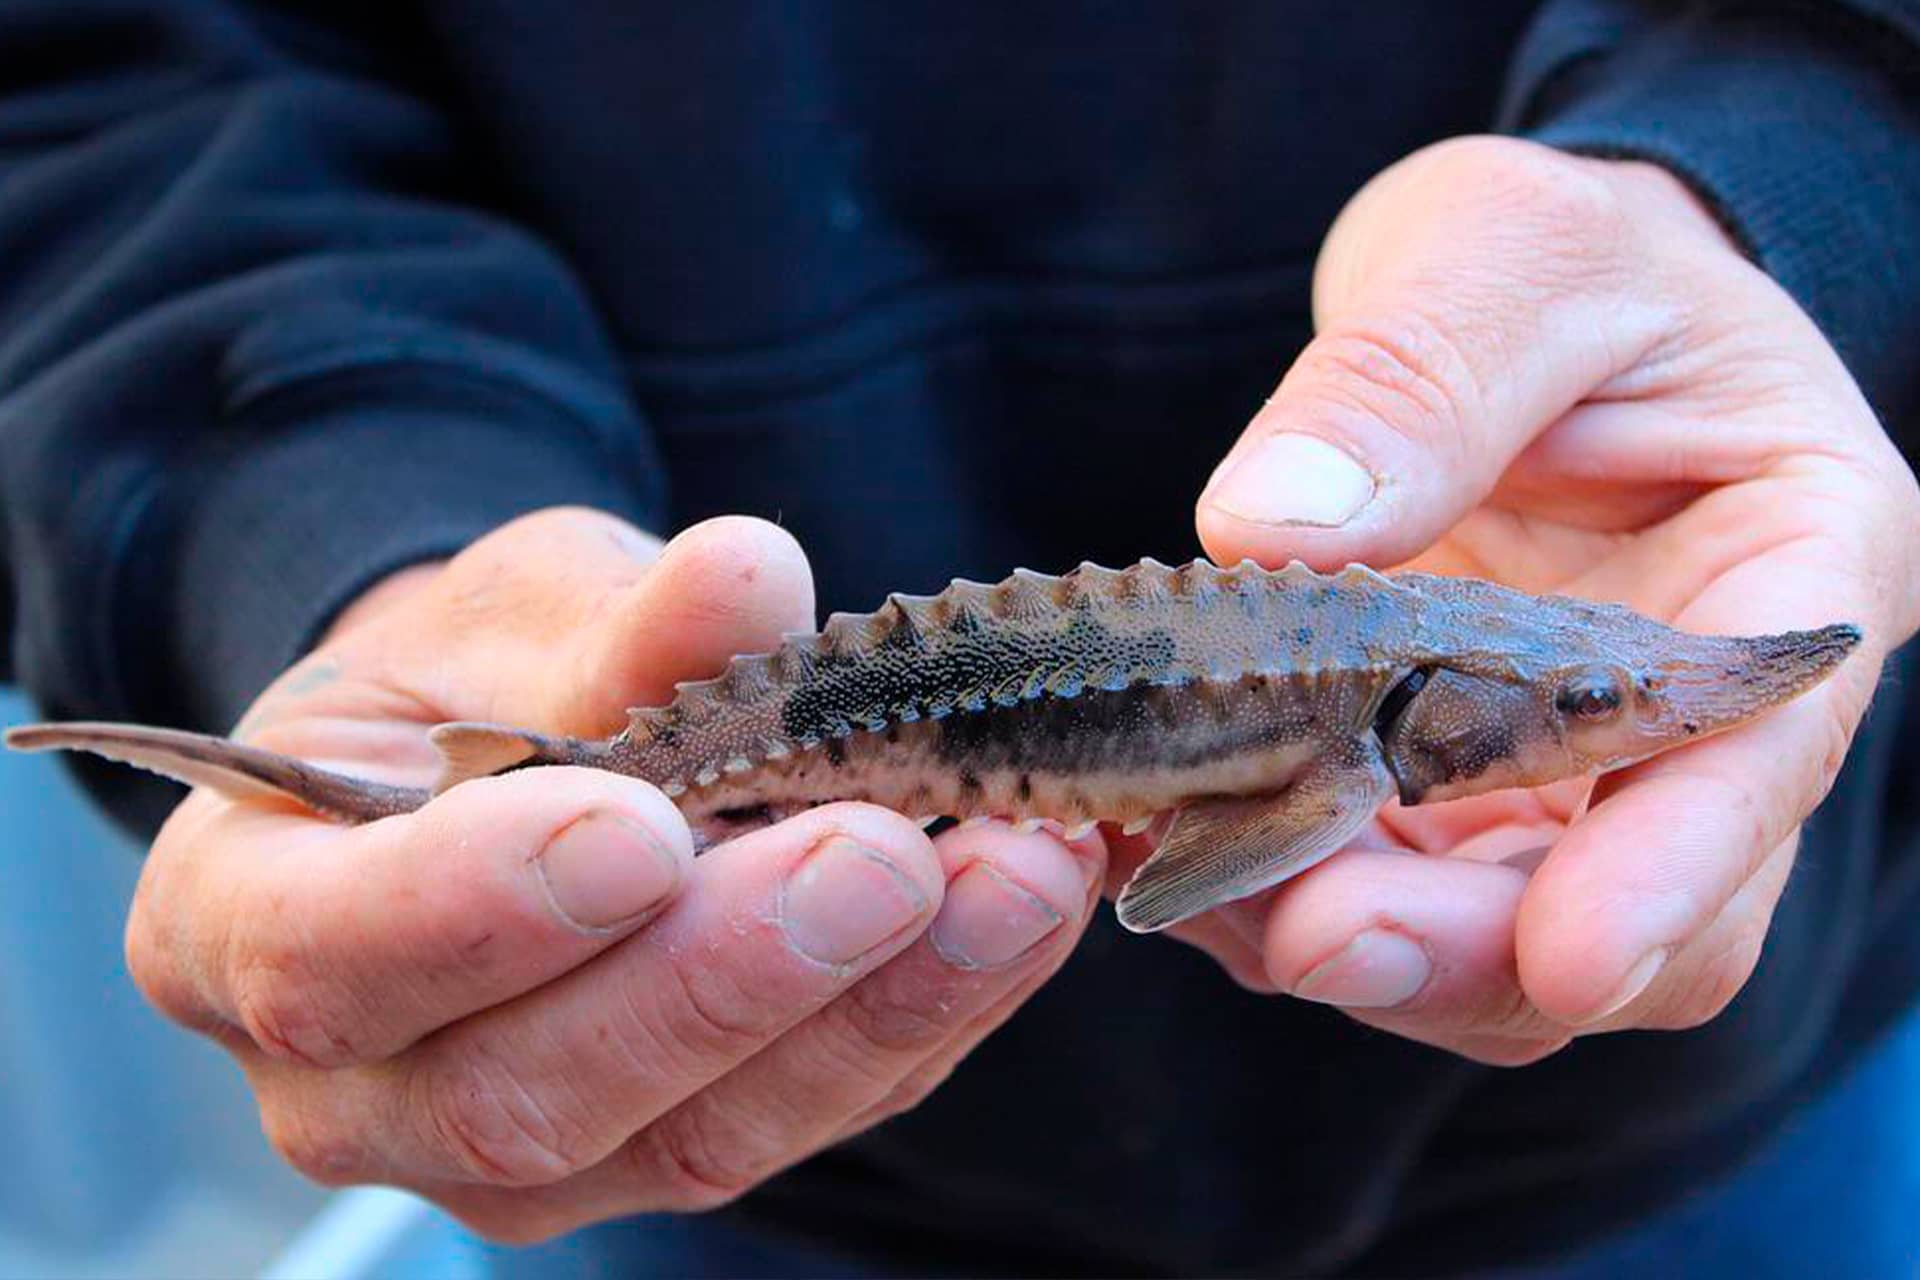 A little sturgeon fish in a man’s hands